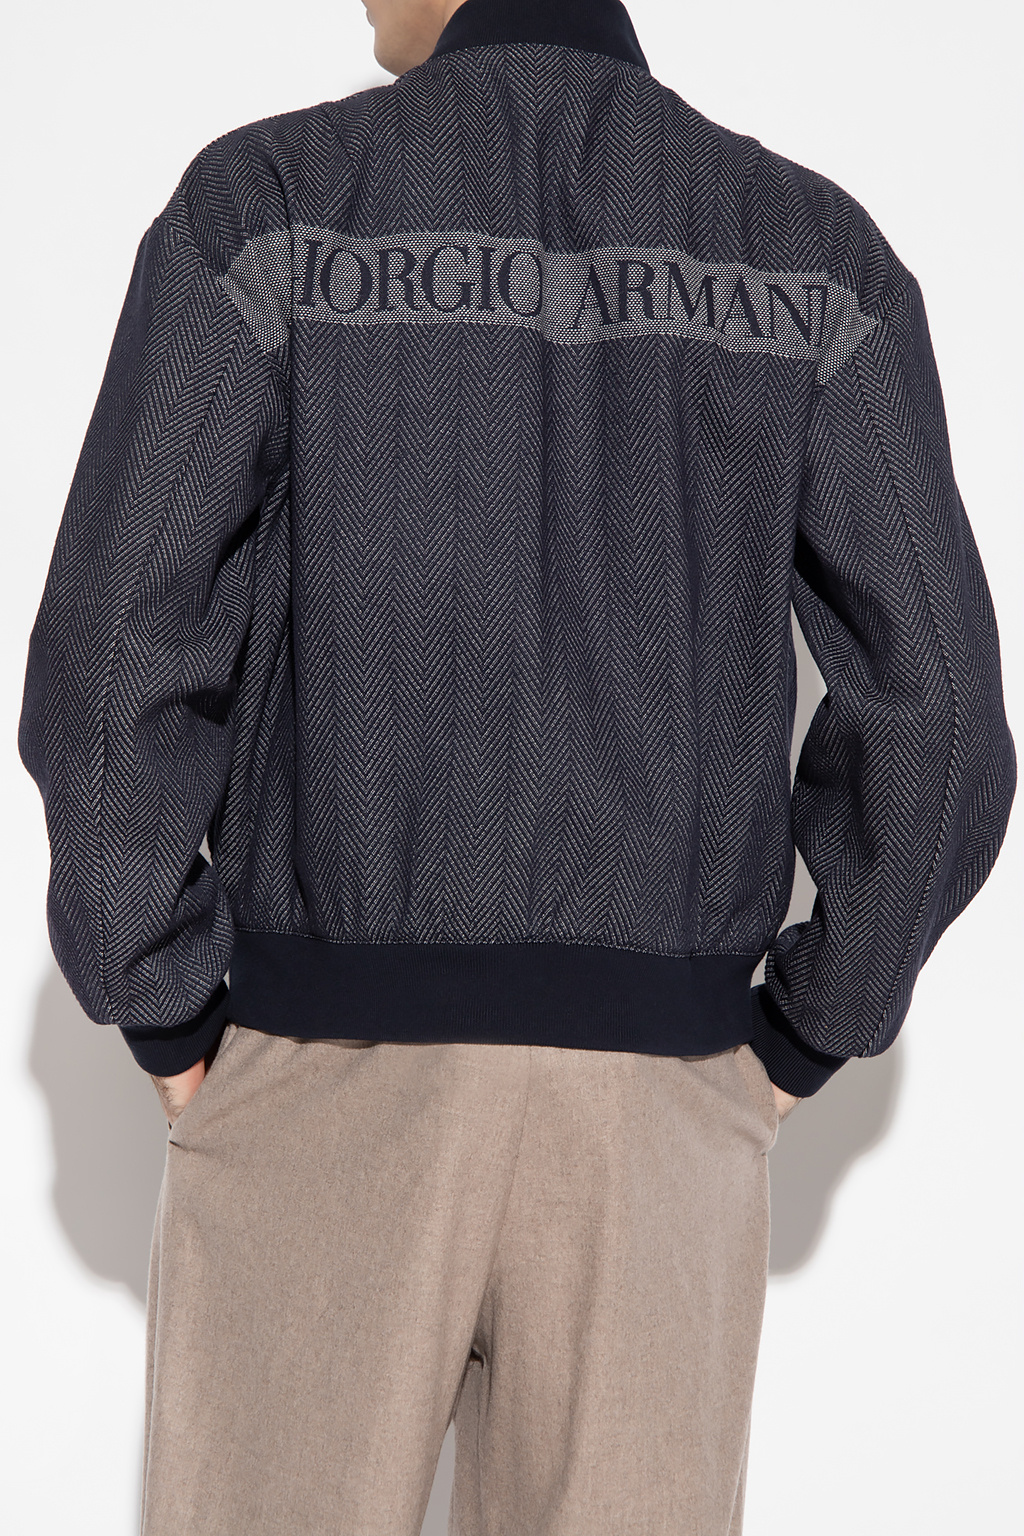 Giorgio Armani Bomber jacket